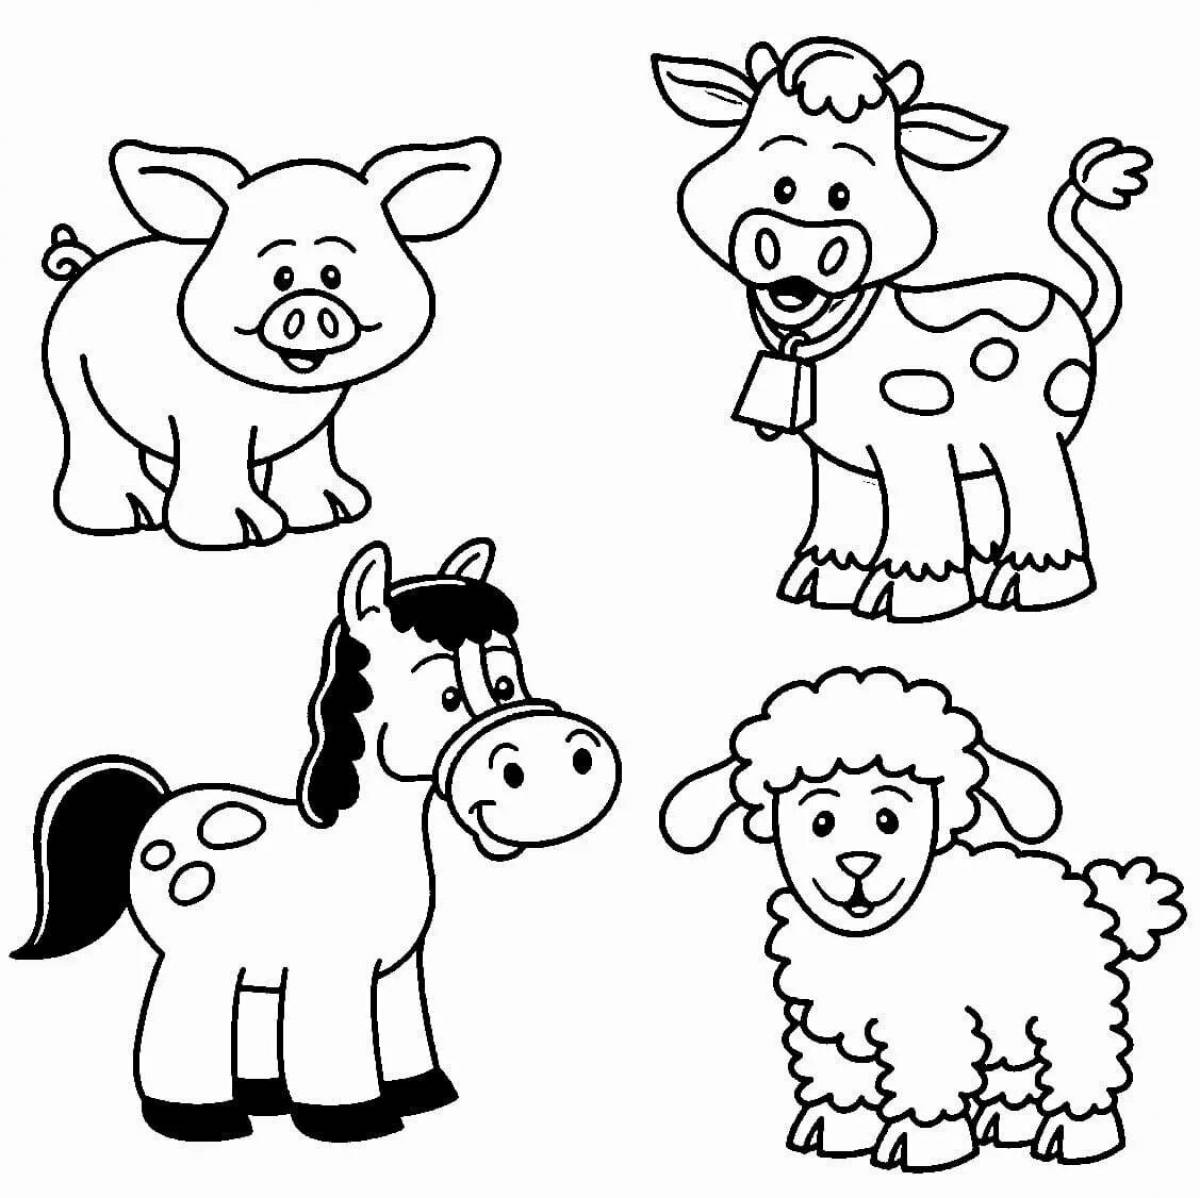 Animal drawings for kids #20